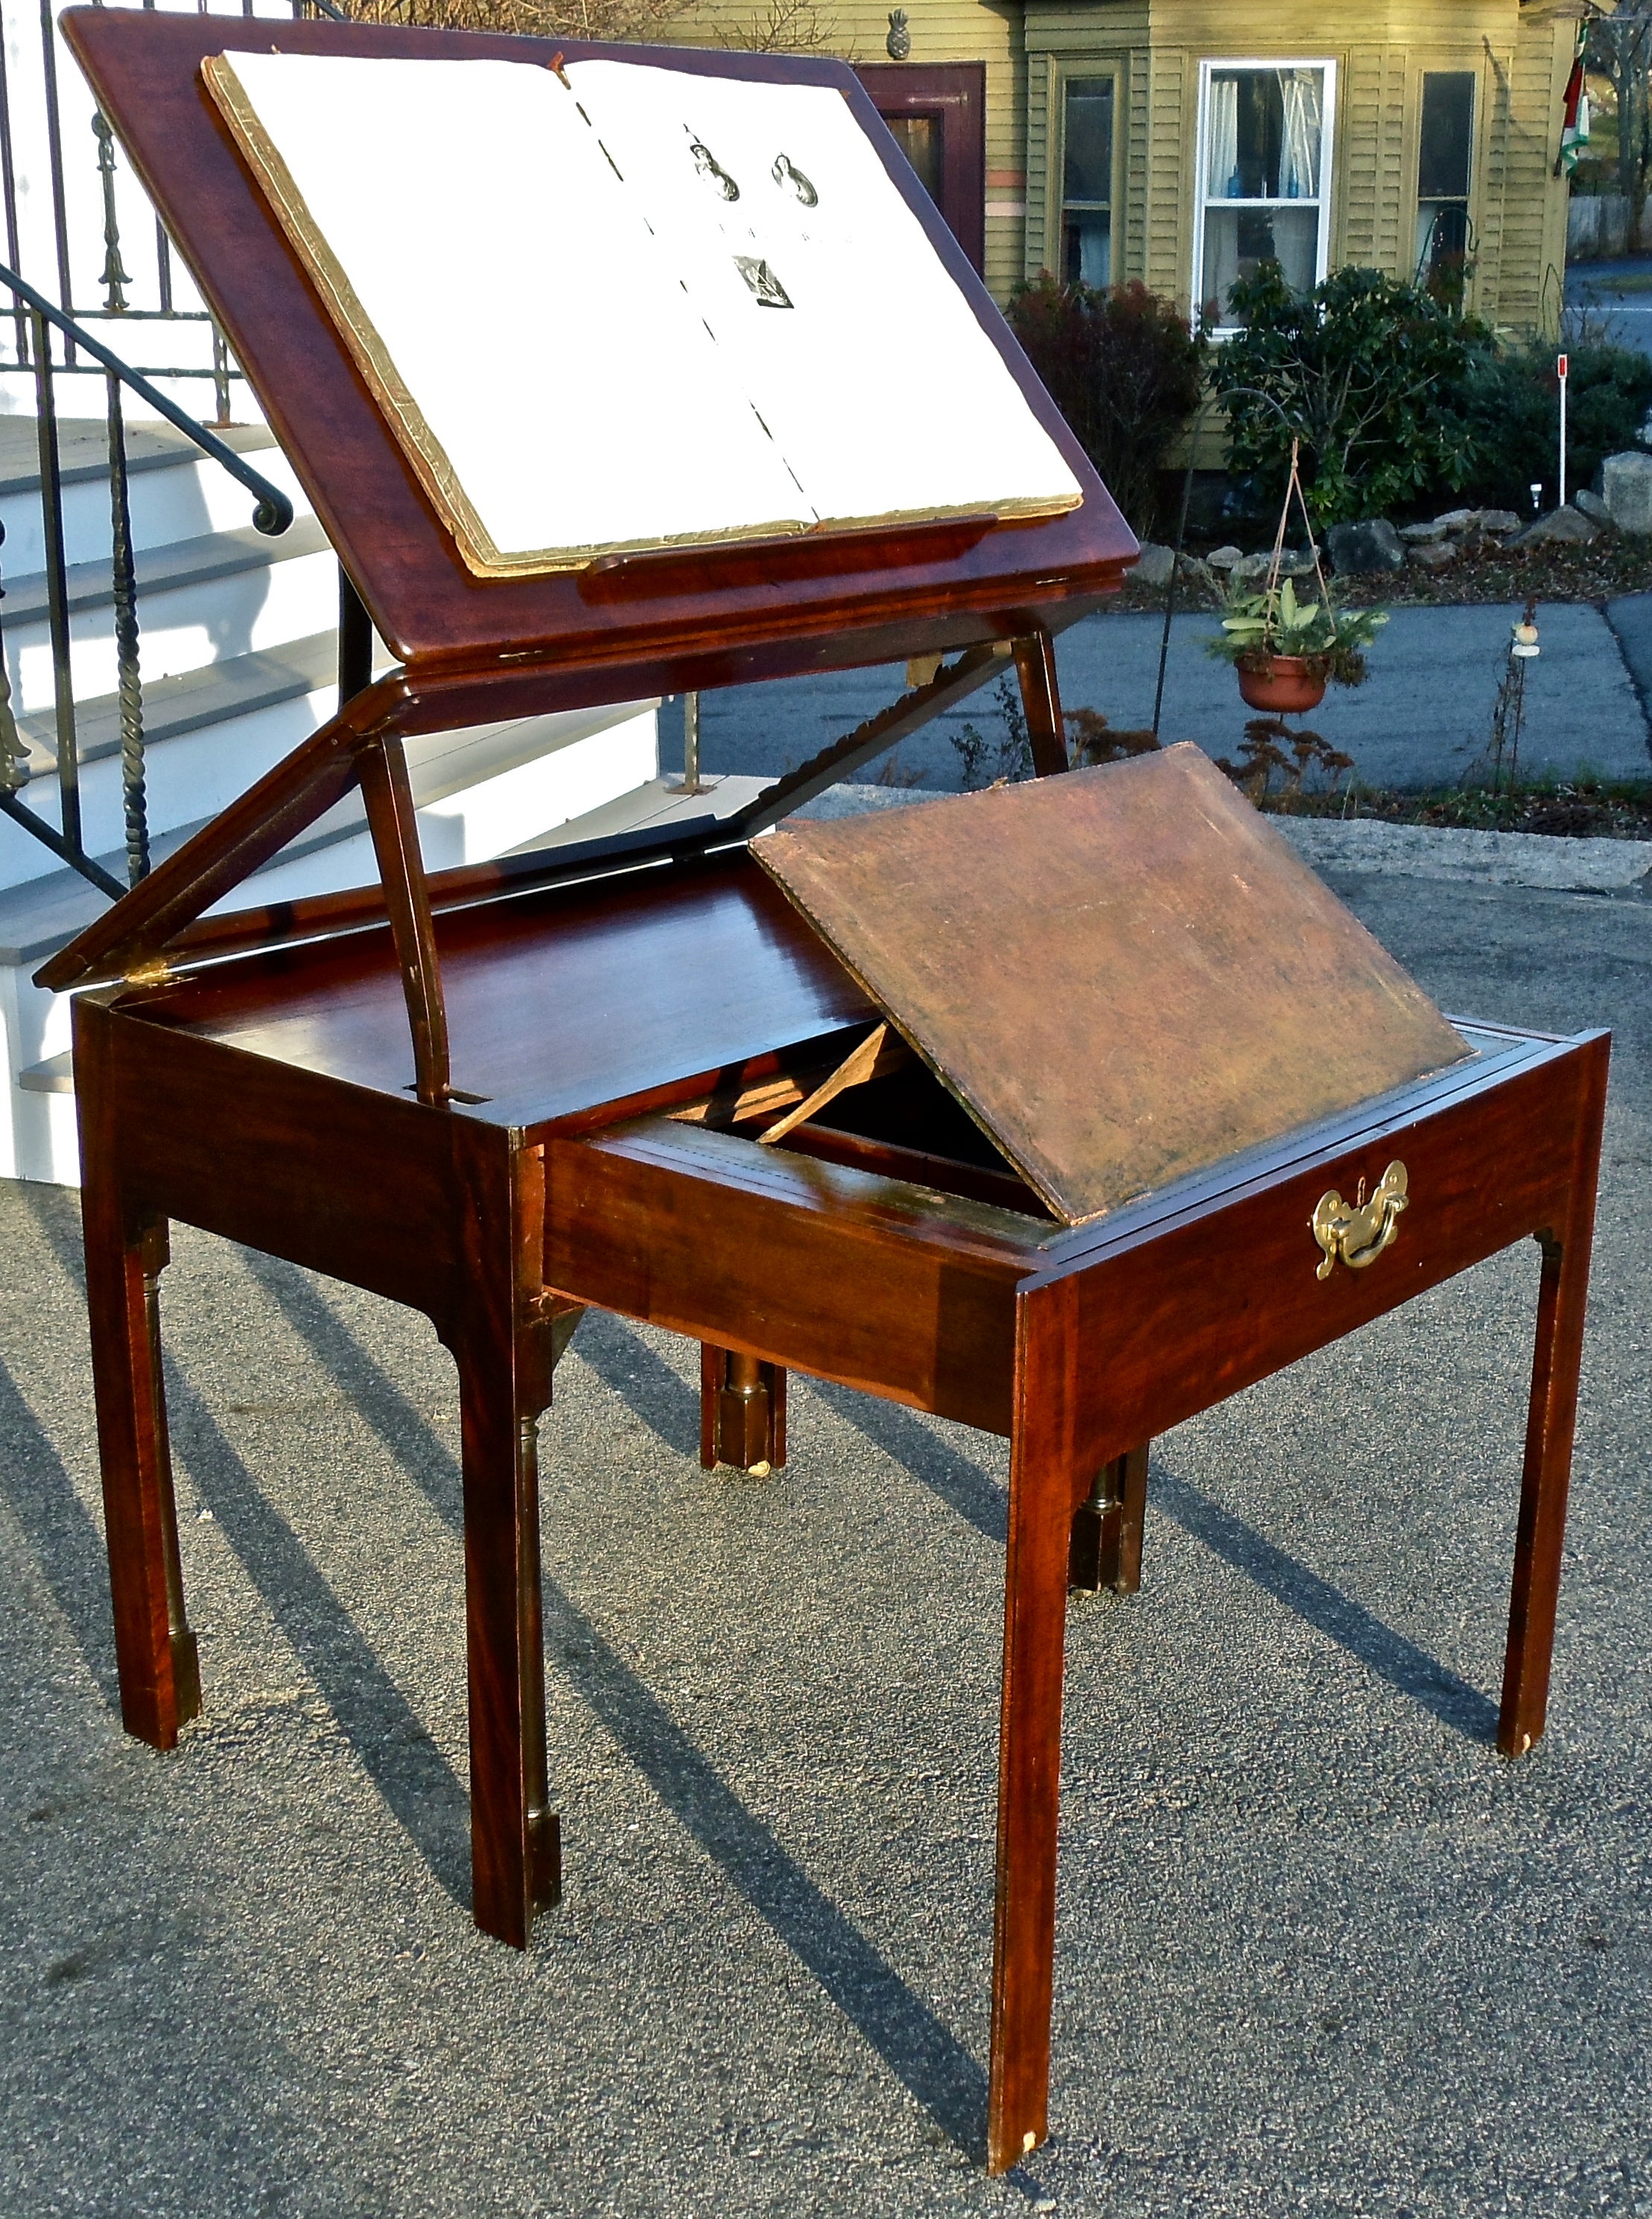 Georgian Period Metamorphic Architect's Table